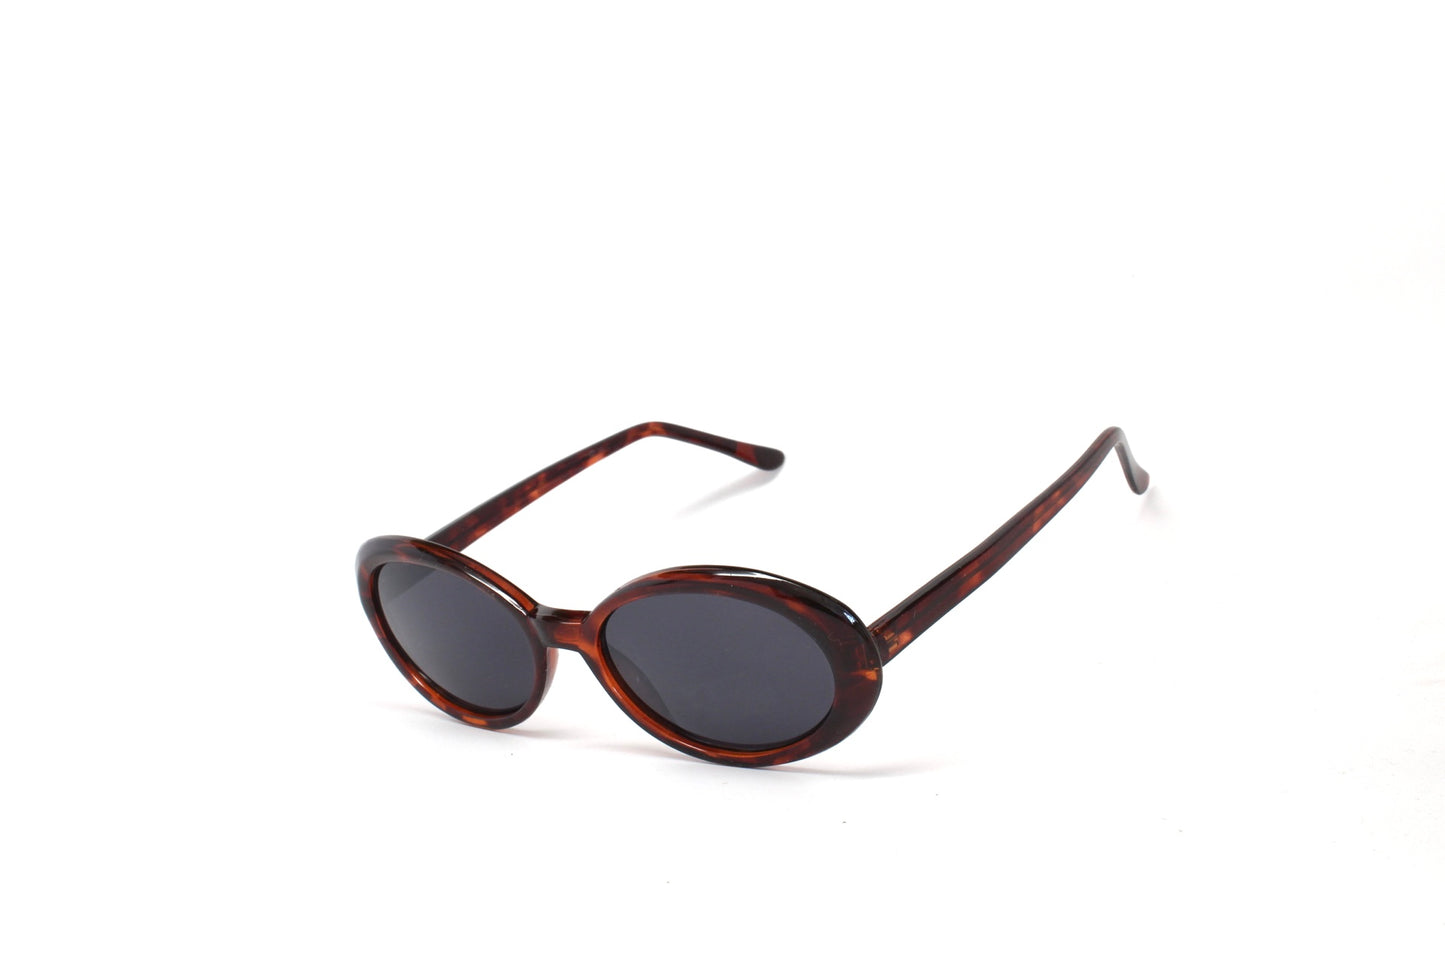 Vintage Standard Size 90s Mod Original Hermosa Oval Sunglasses - Red/Black